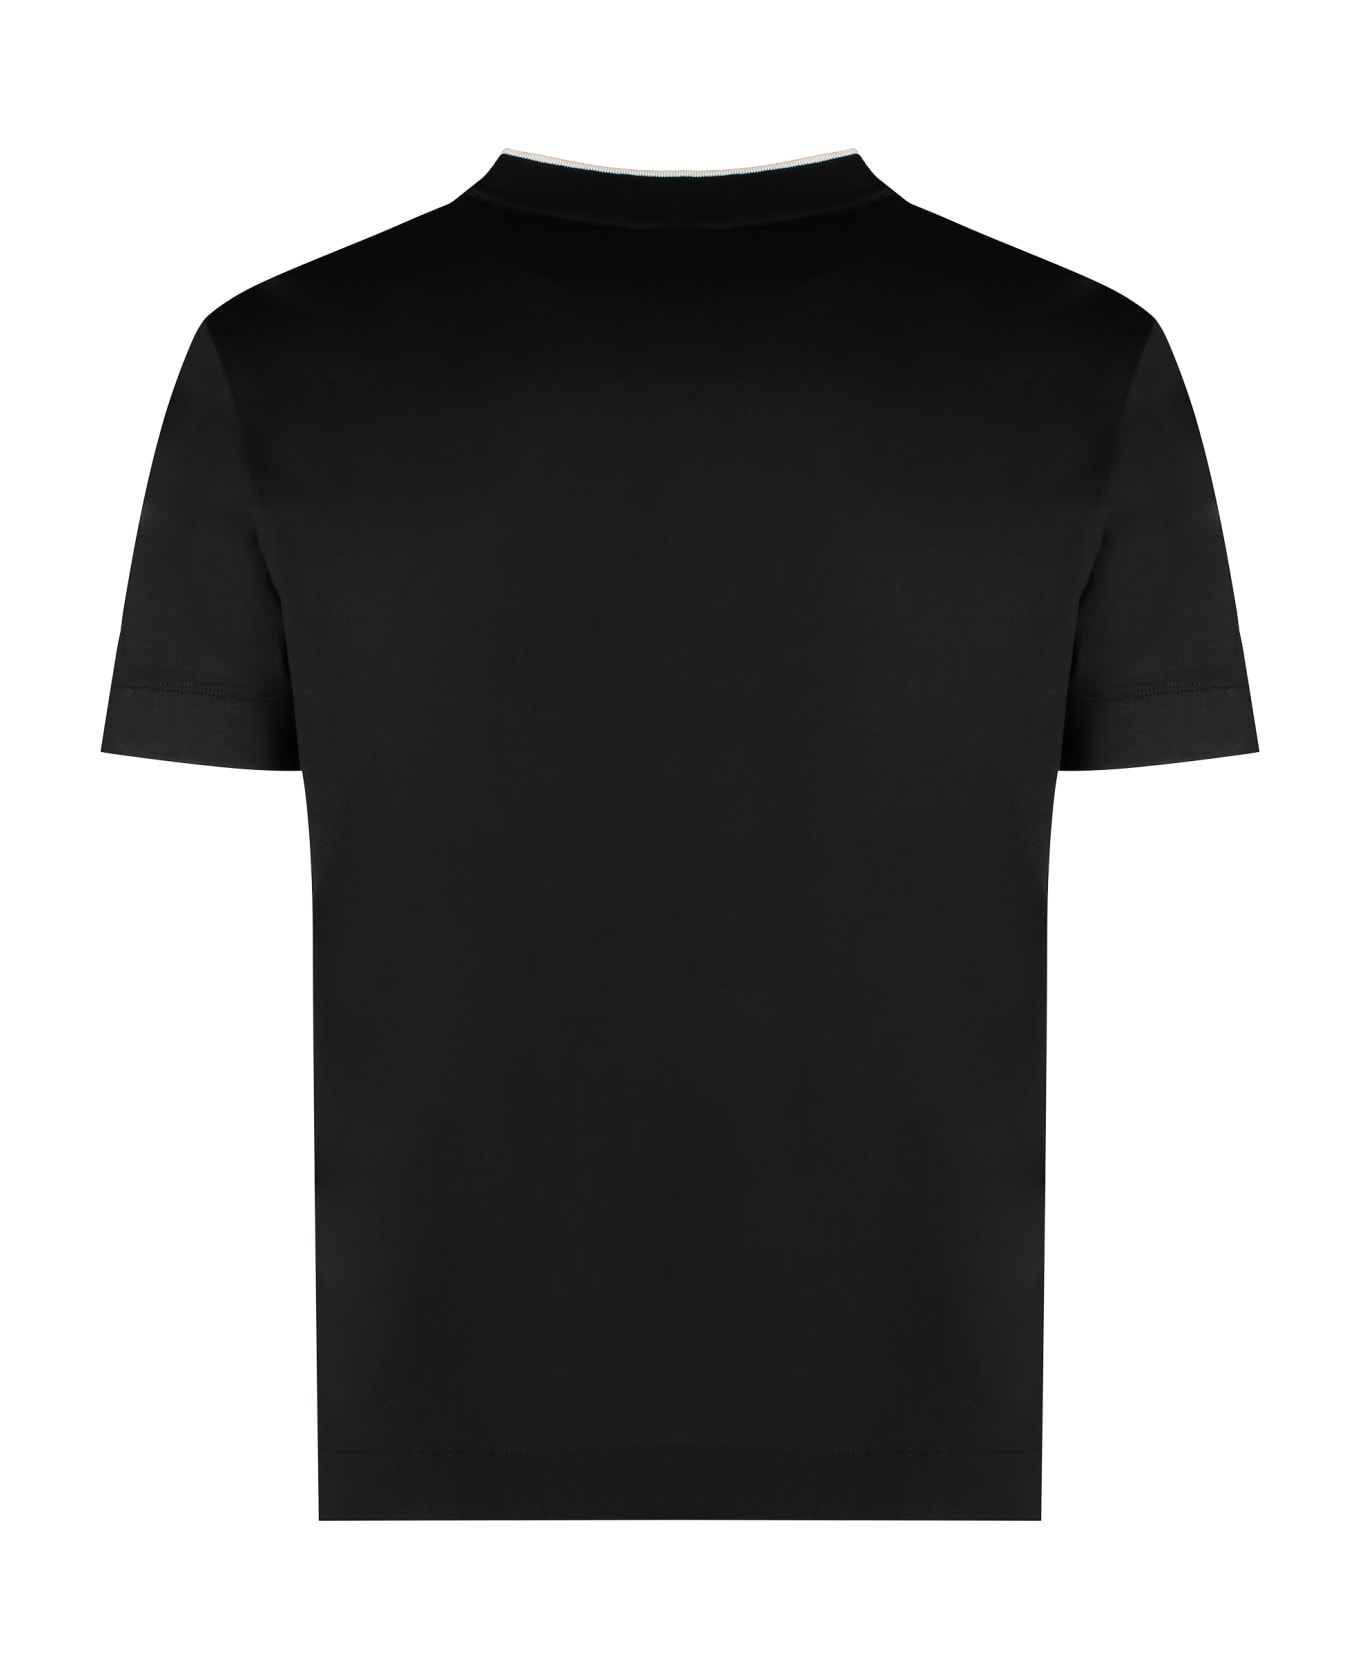 Emporio Armani Blend Cotton Crew-neck T-shirt - Logo Black